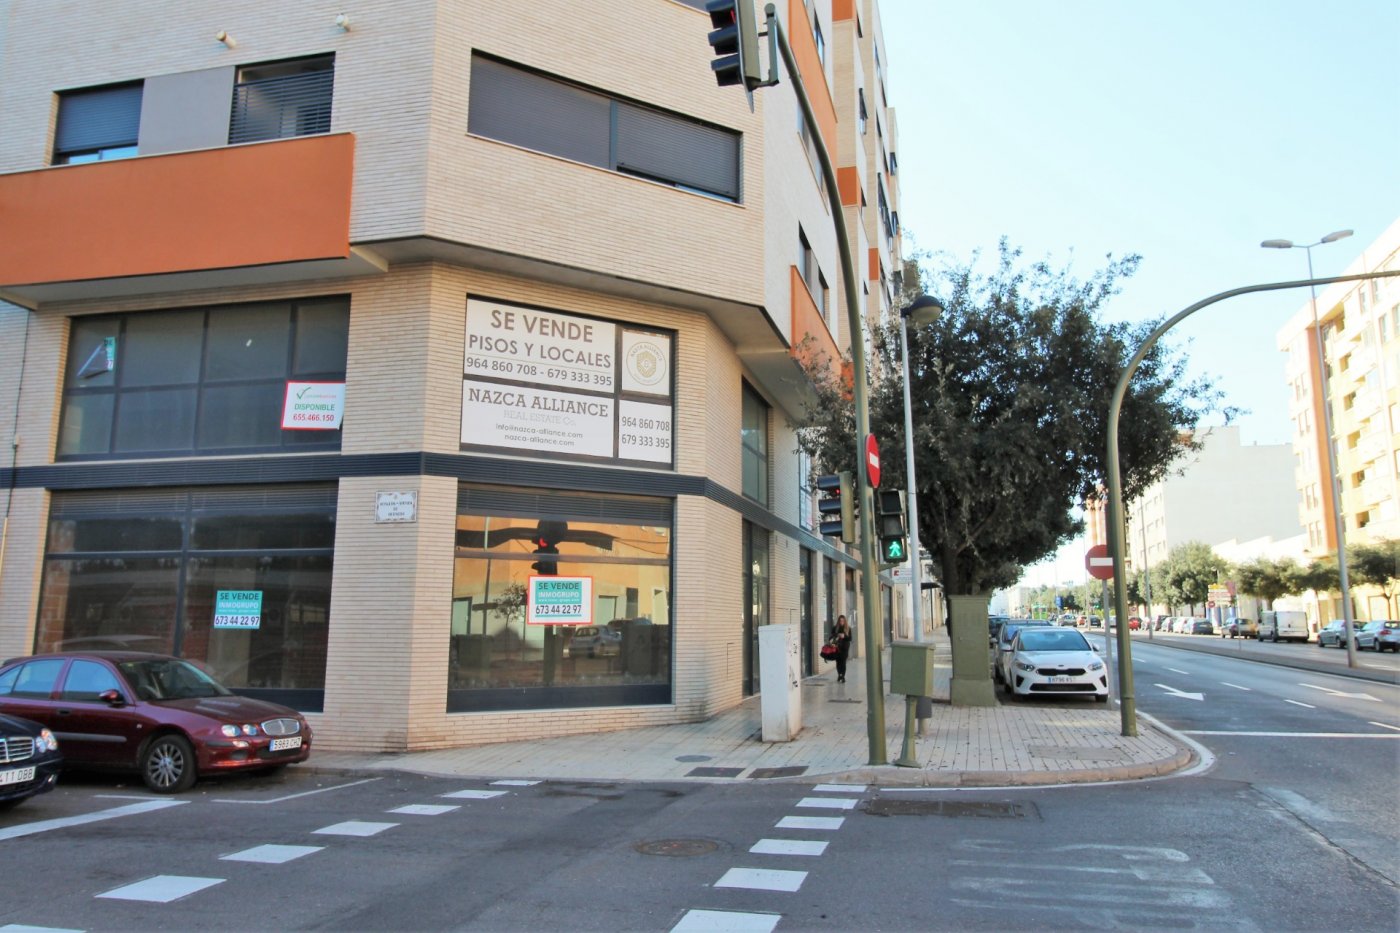 Local comercial en Castellon - Castello de la Plana. Ref. 12-45-01579